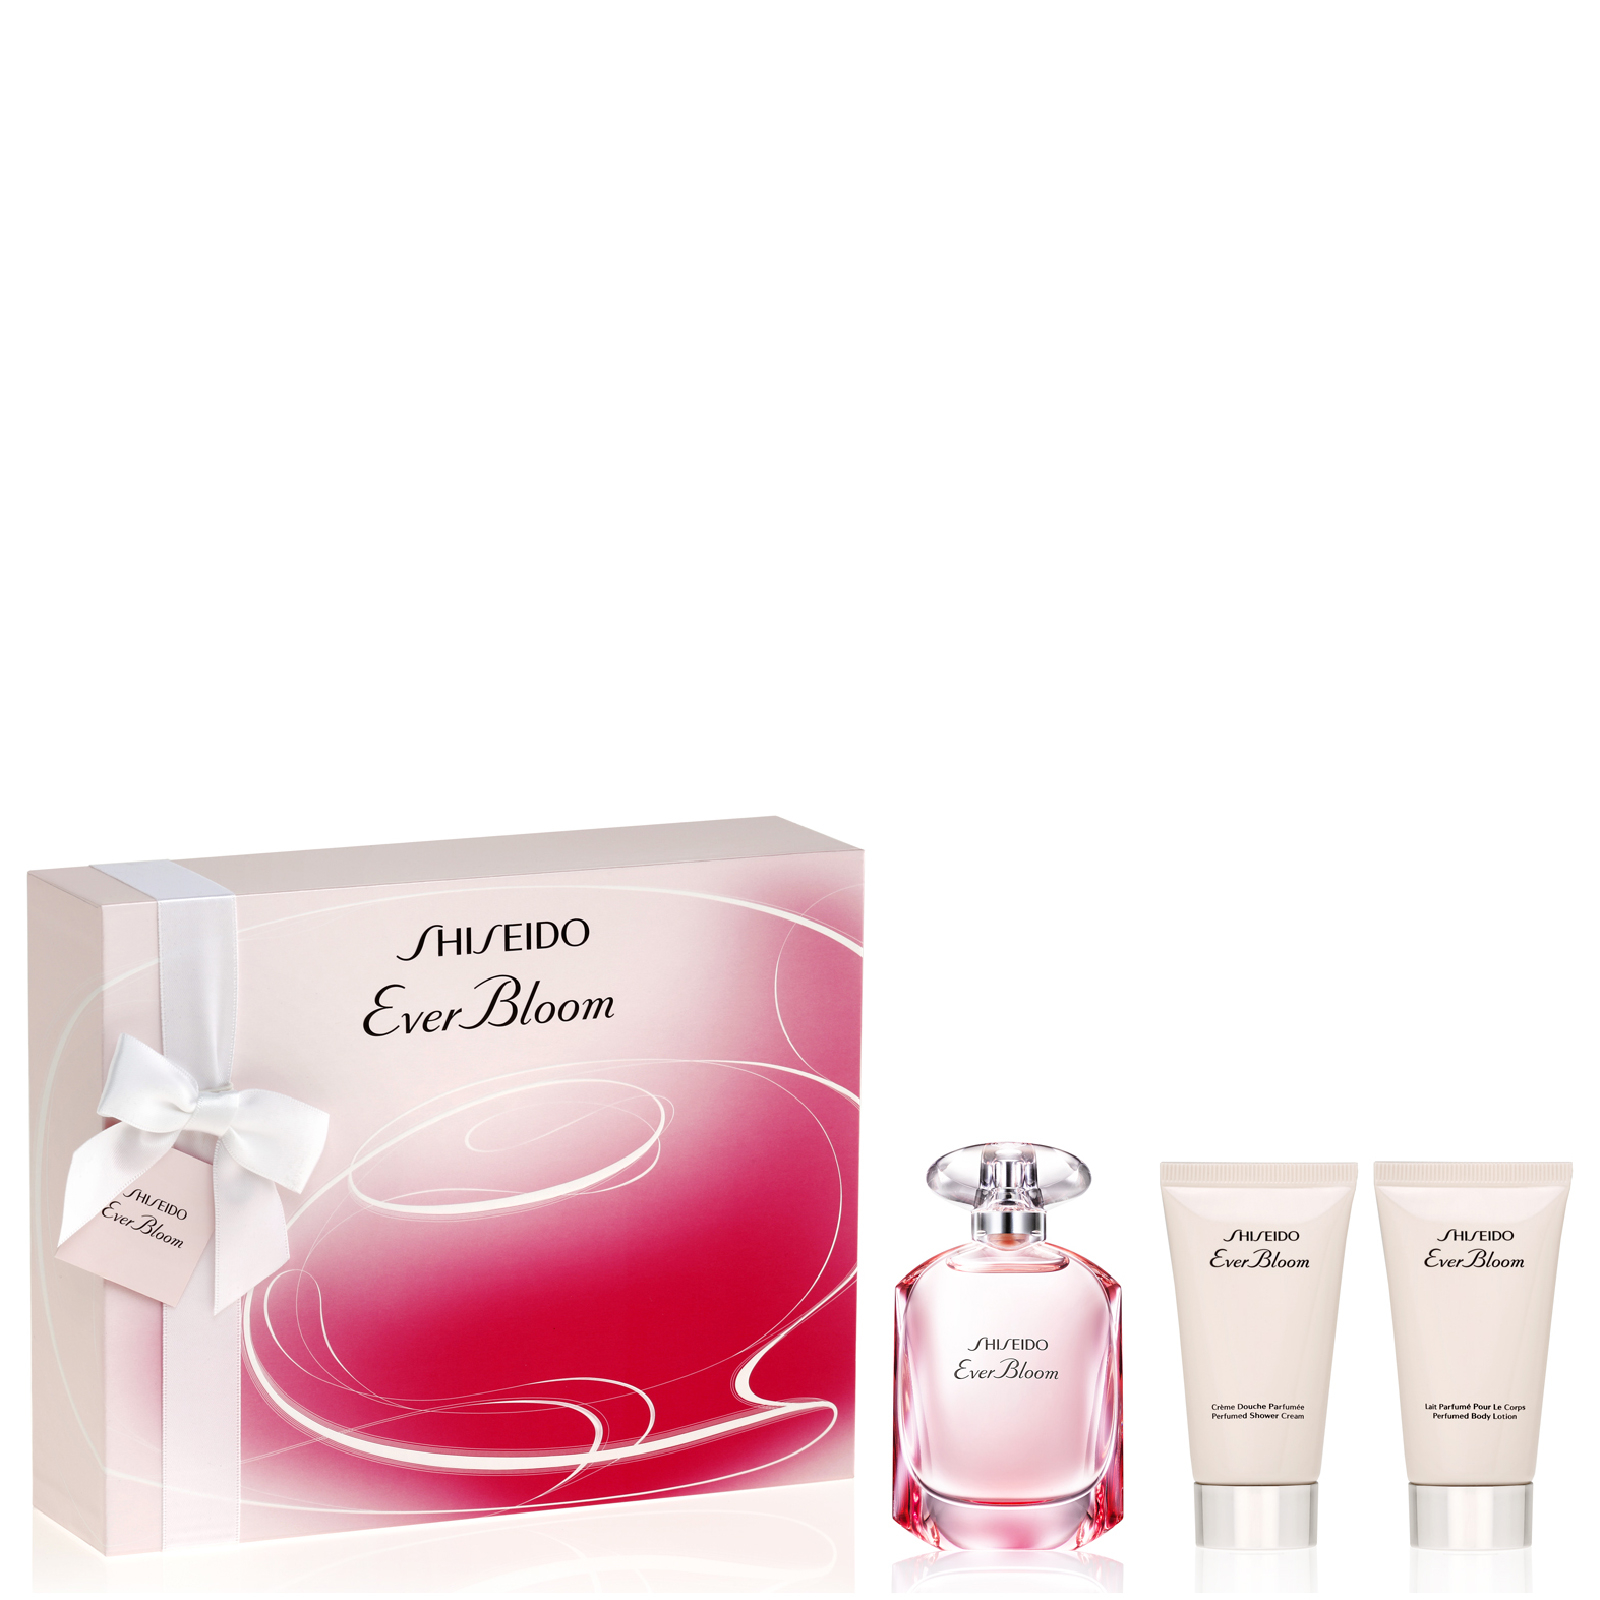 Shiseido Ever Bloom Eau de Parfum, Shower Cream and Body Lotion Kit